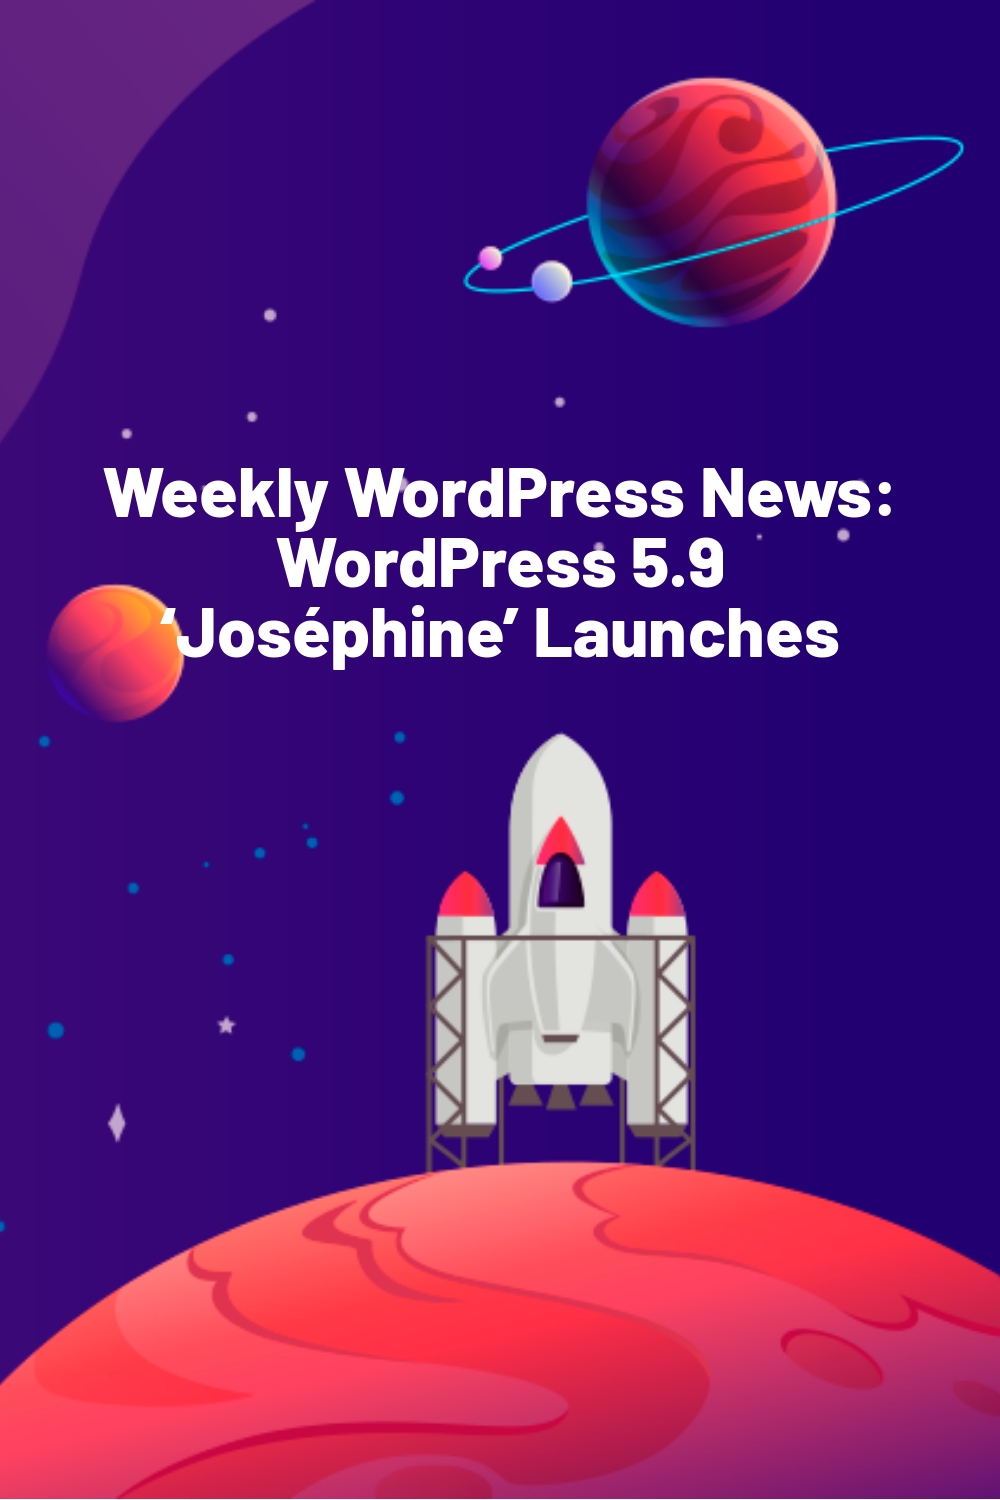 Weekly WordPress News: WordPress 5.9 ‘Joséphine’ Launches